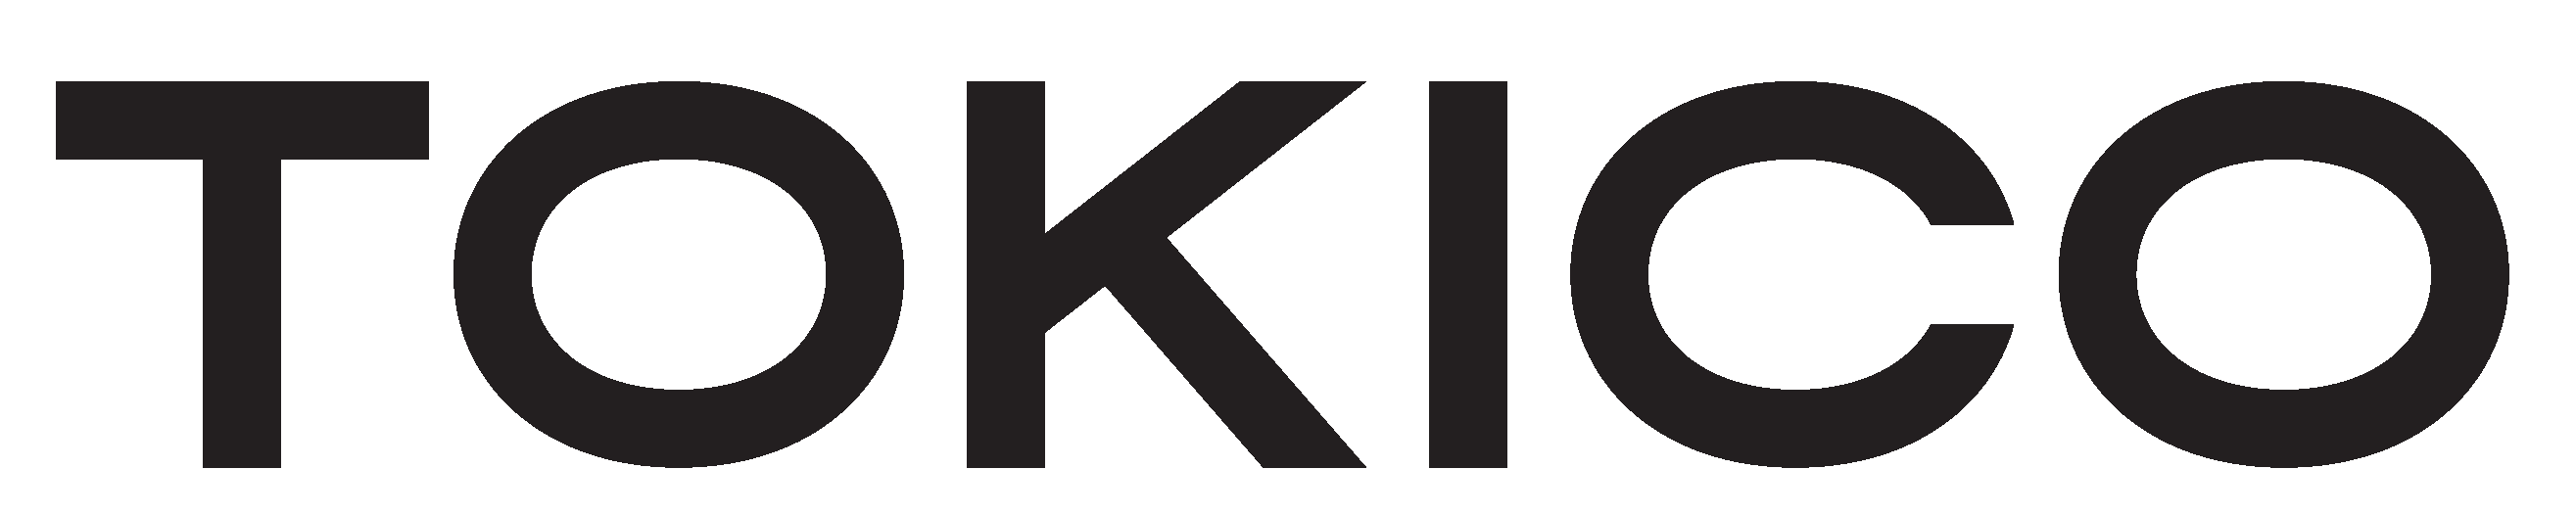 hitachi and hüco logo